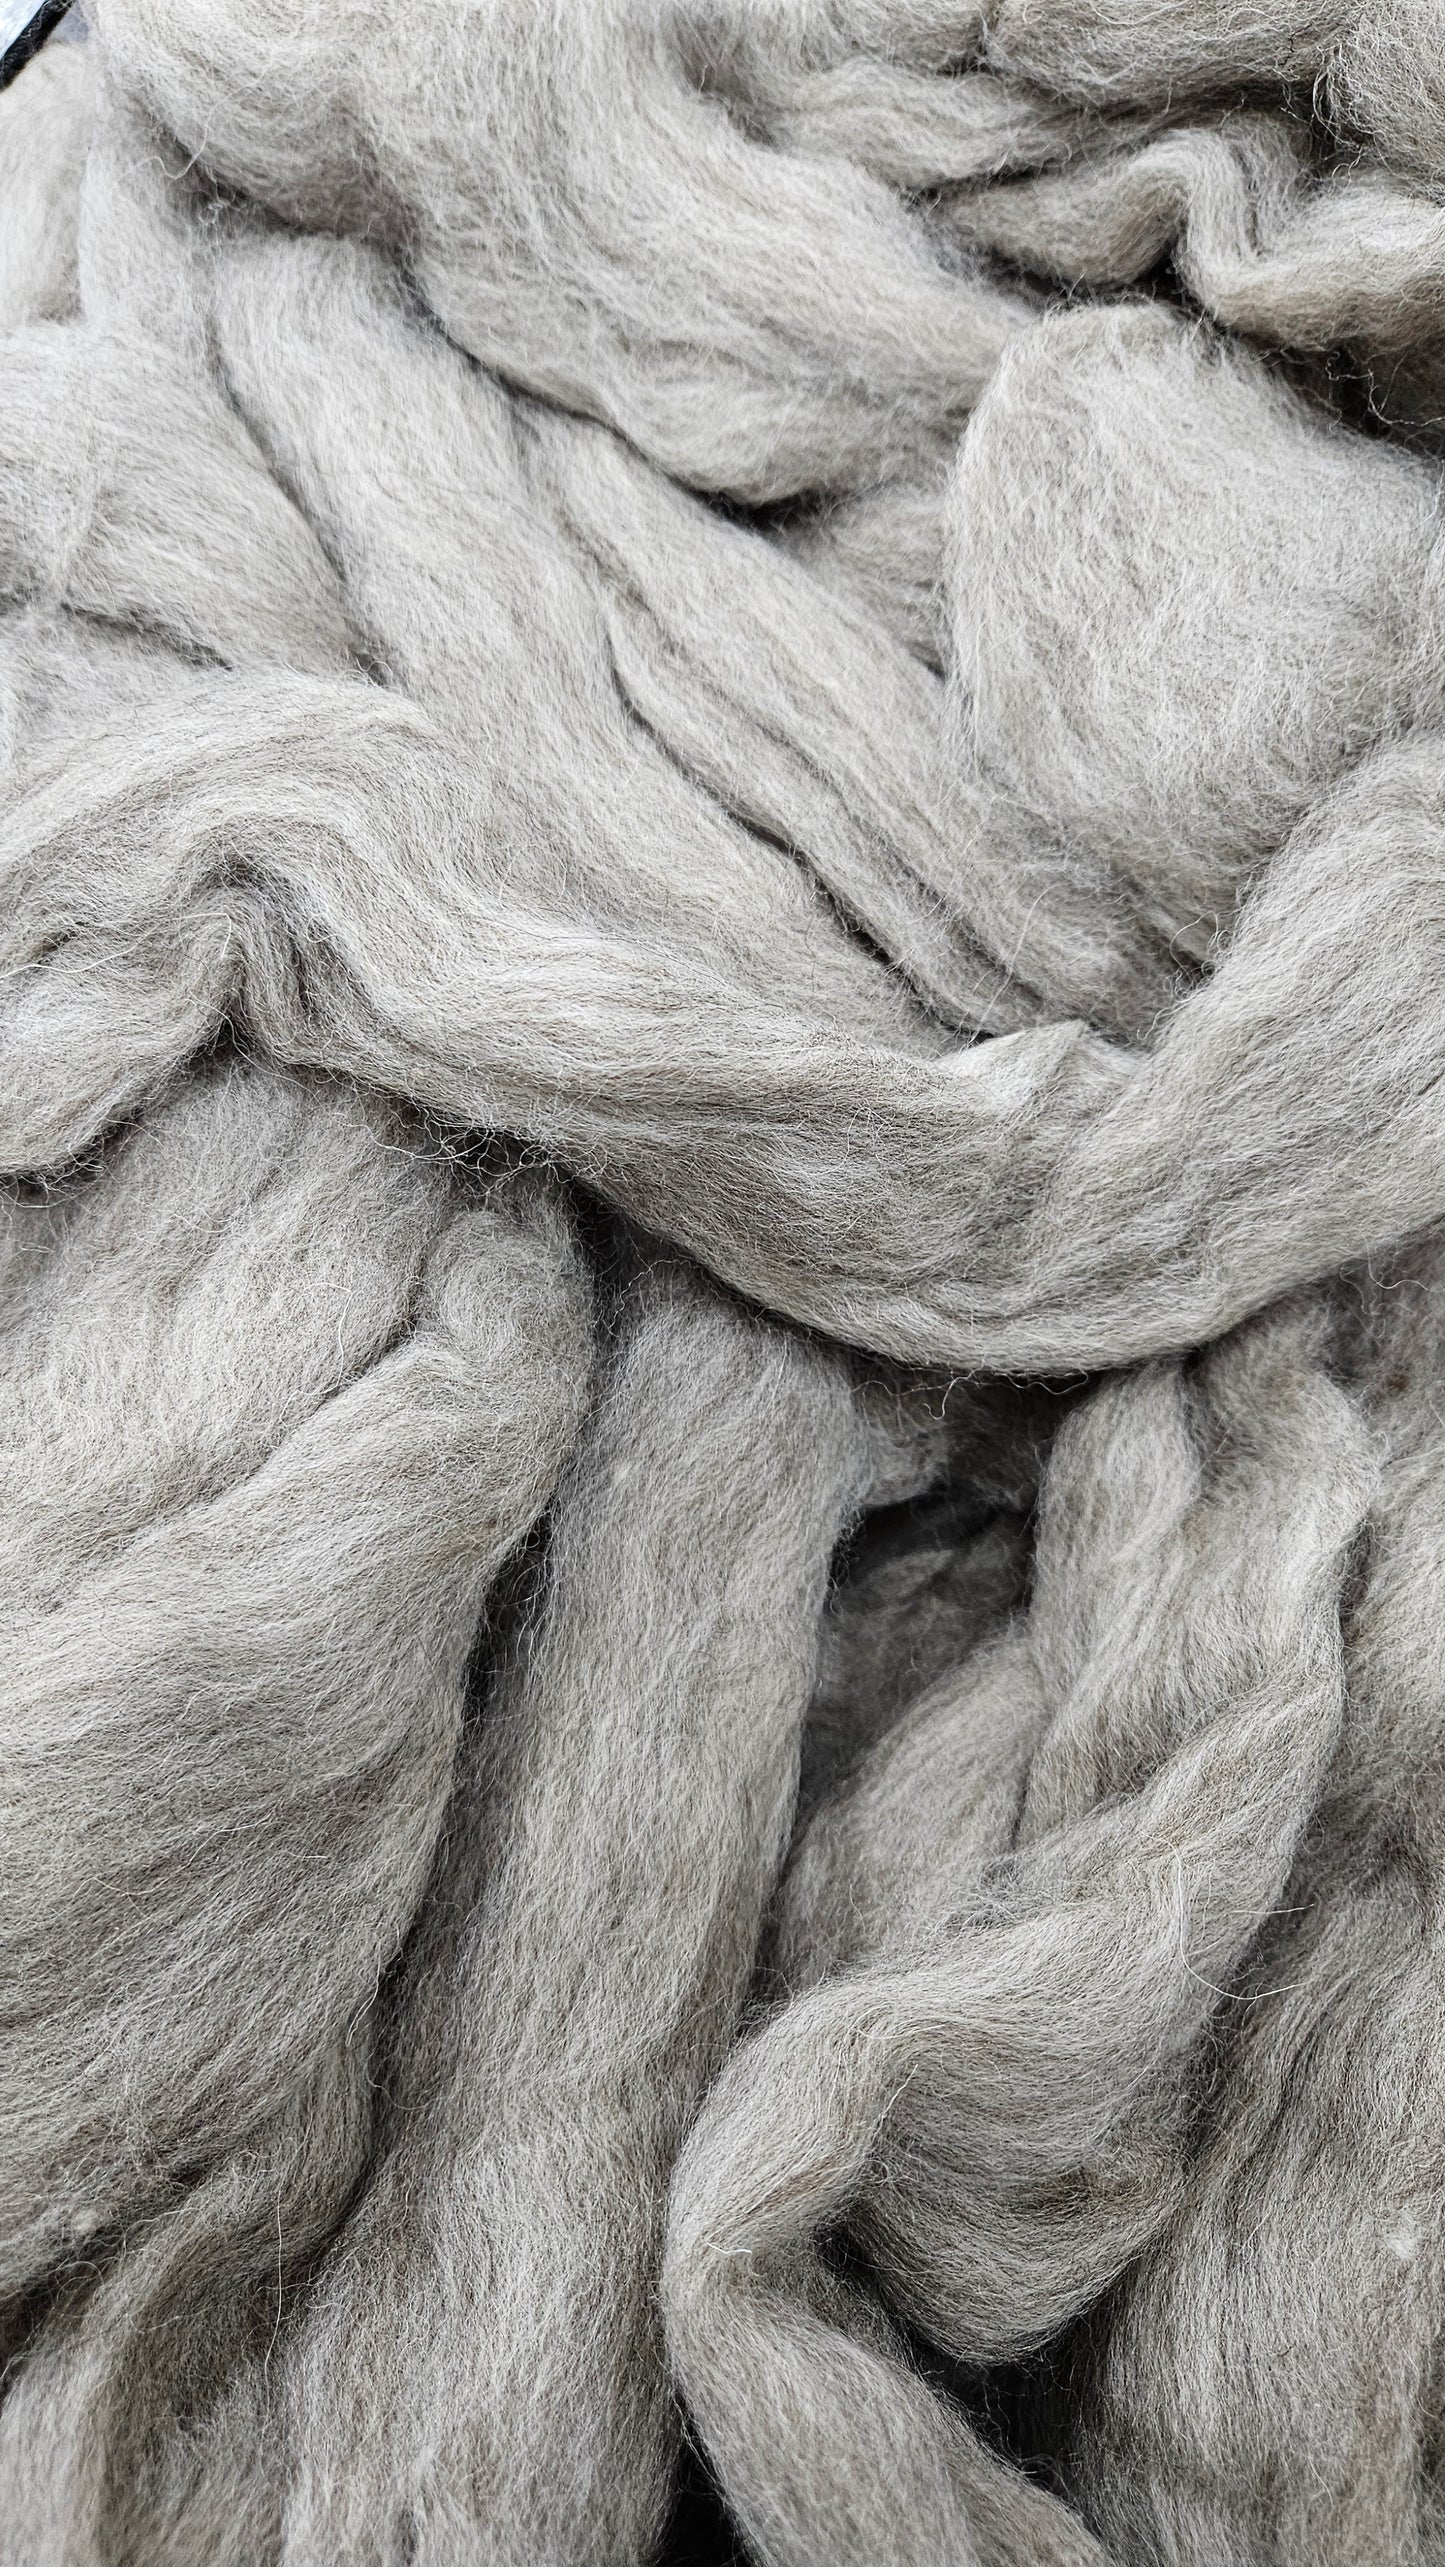 SHETLAND - Natural Wool Top Beginner Spinning Felting Carding Dyeing - 6 oz Grey